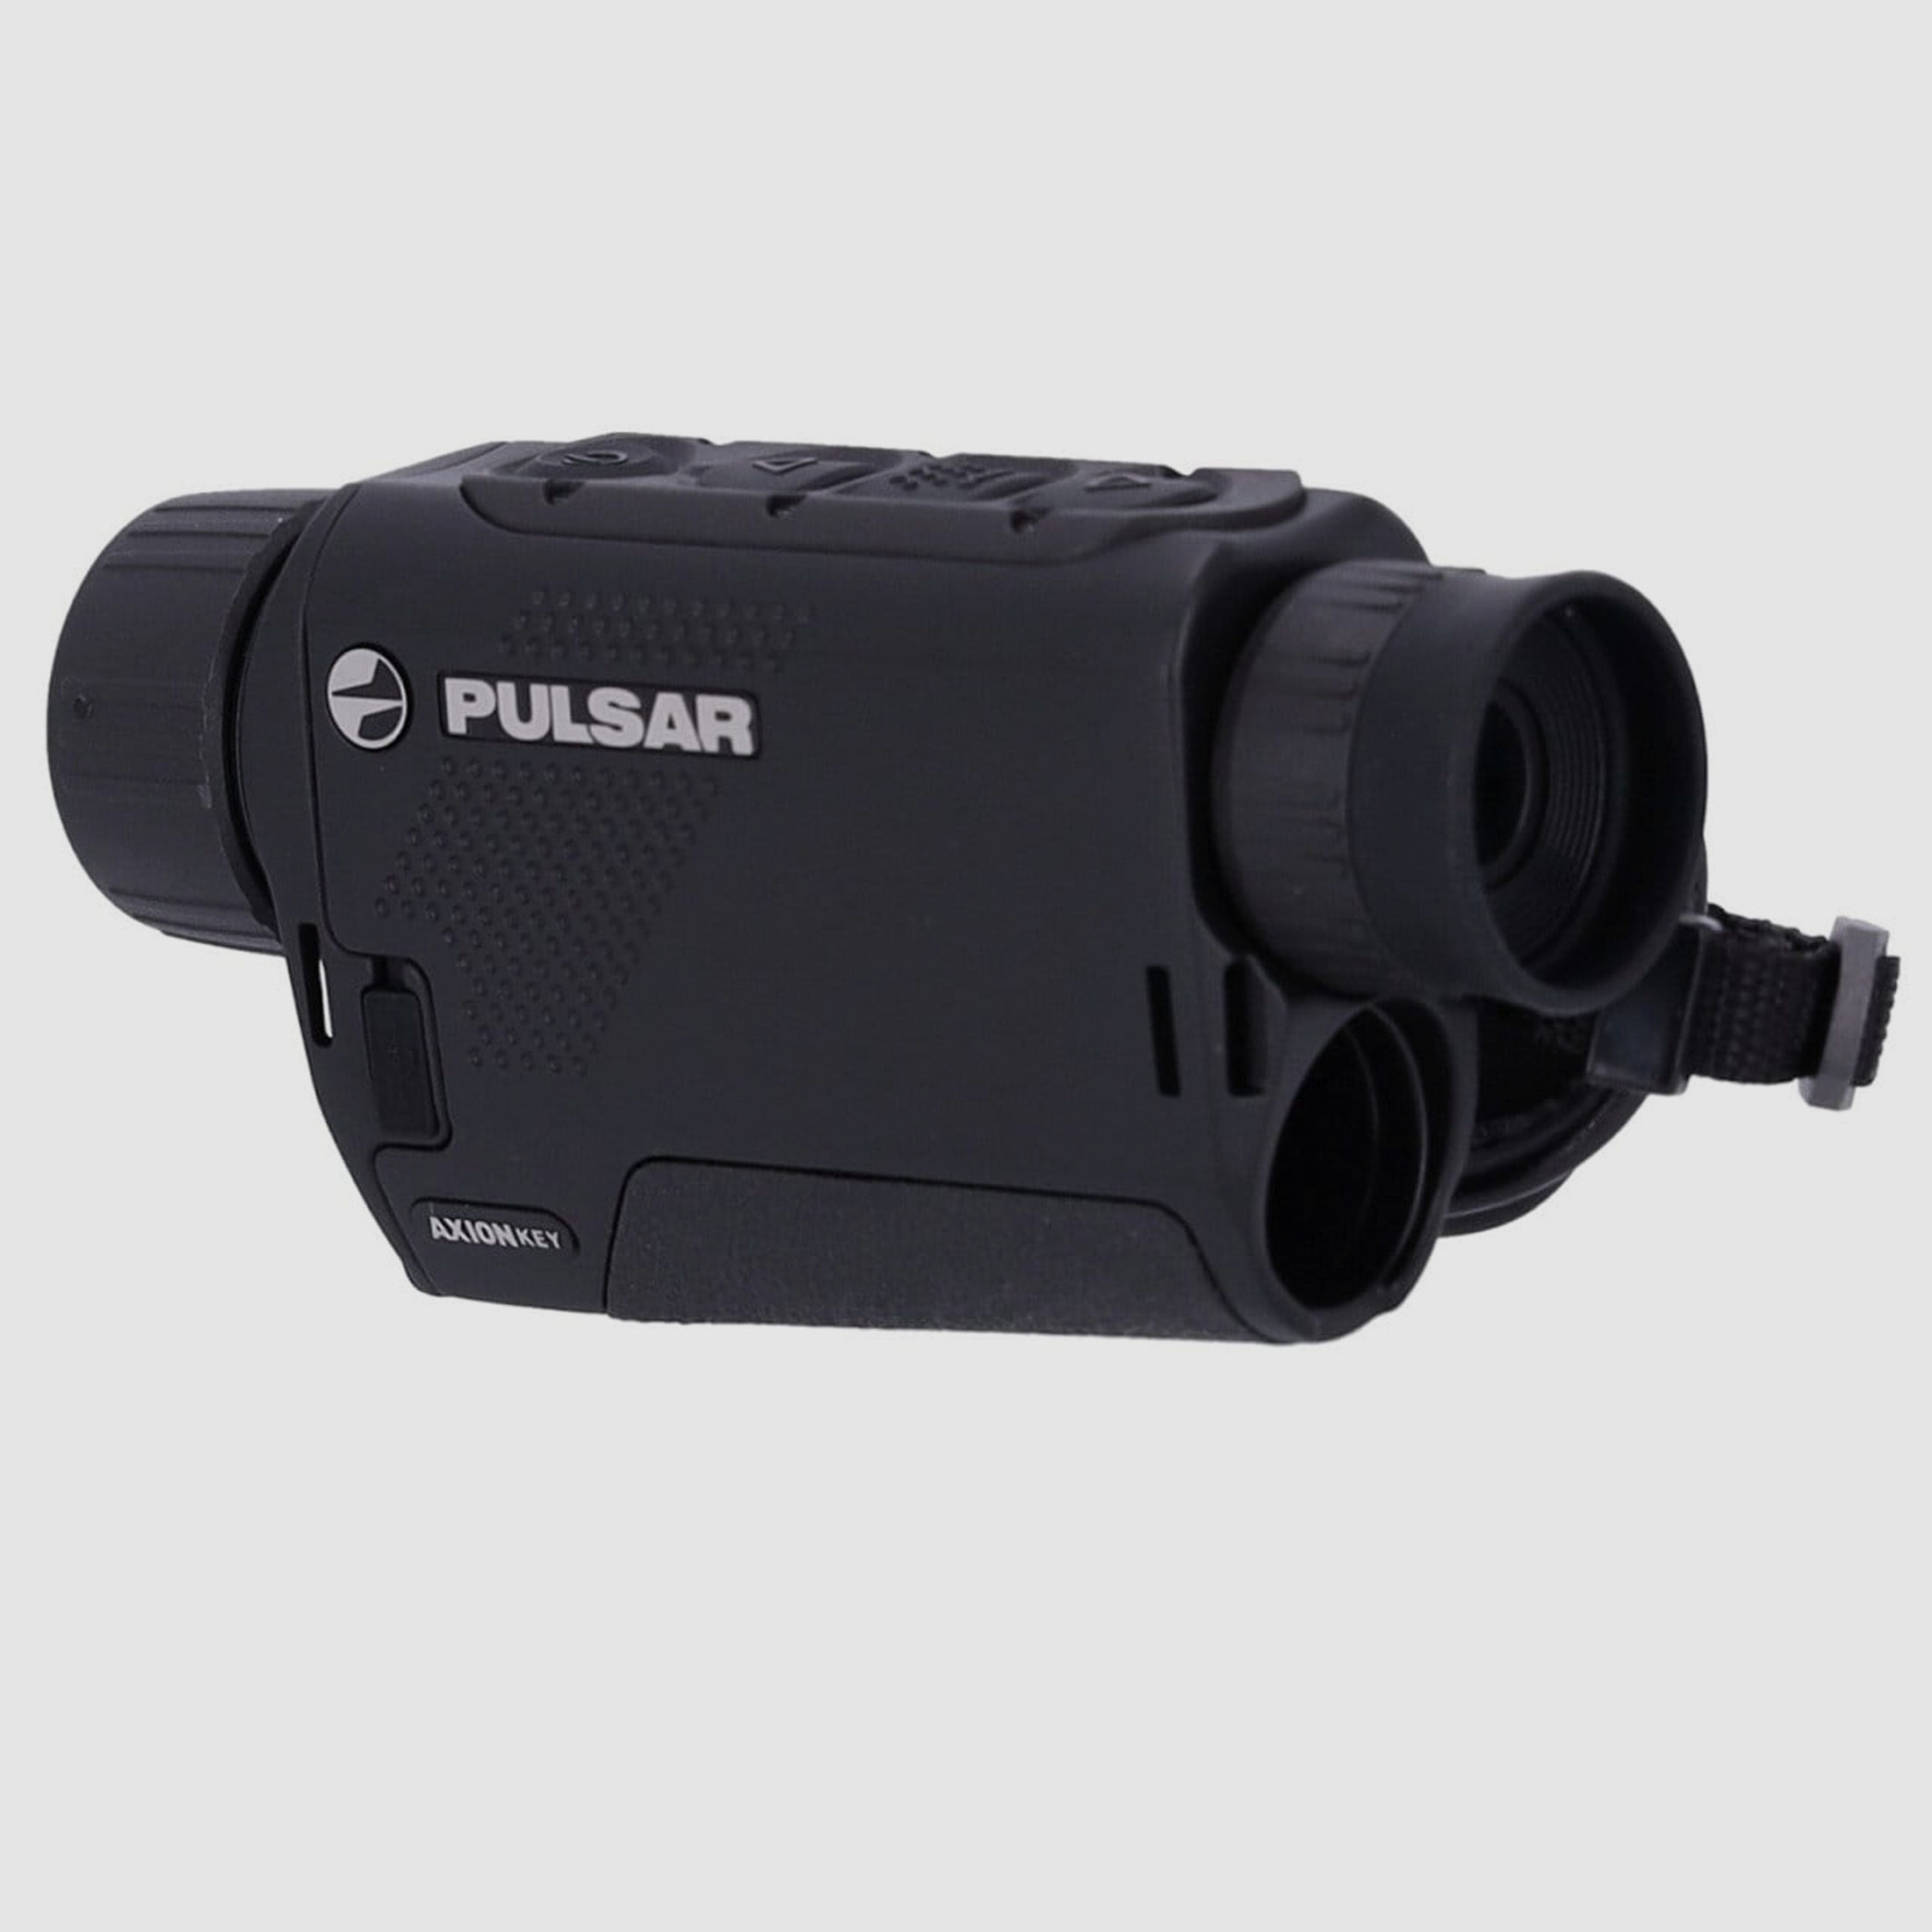 Pulsar Axion Key XM30